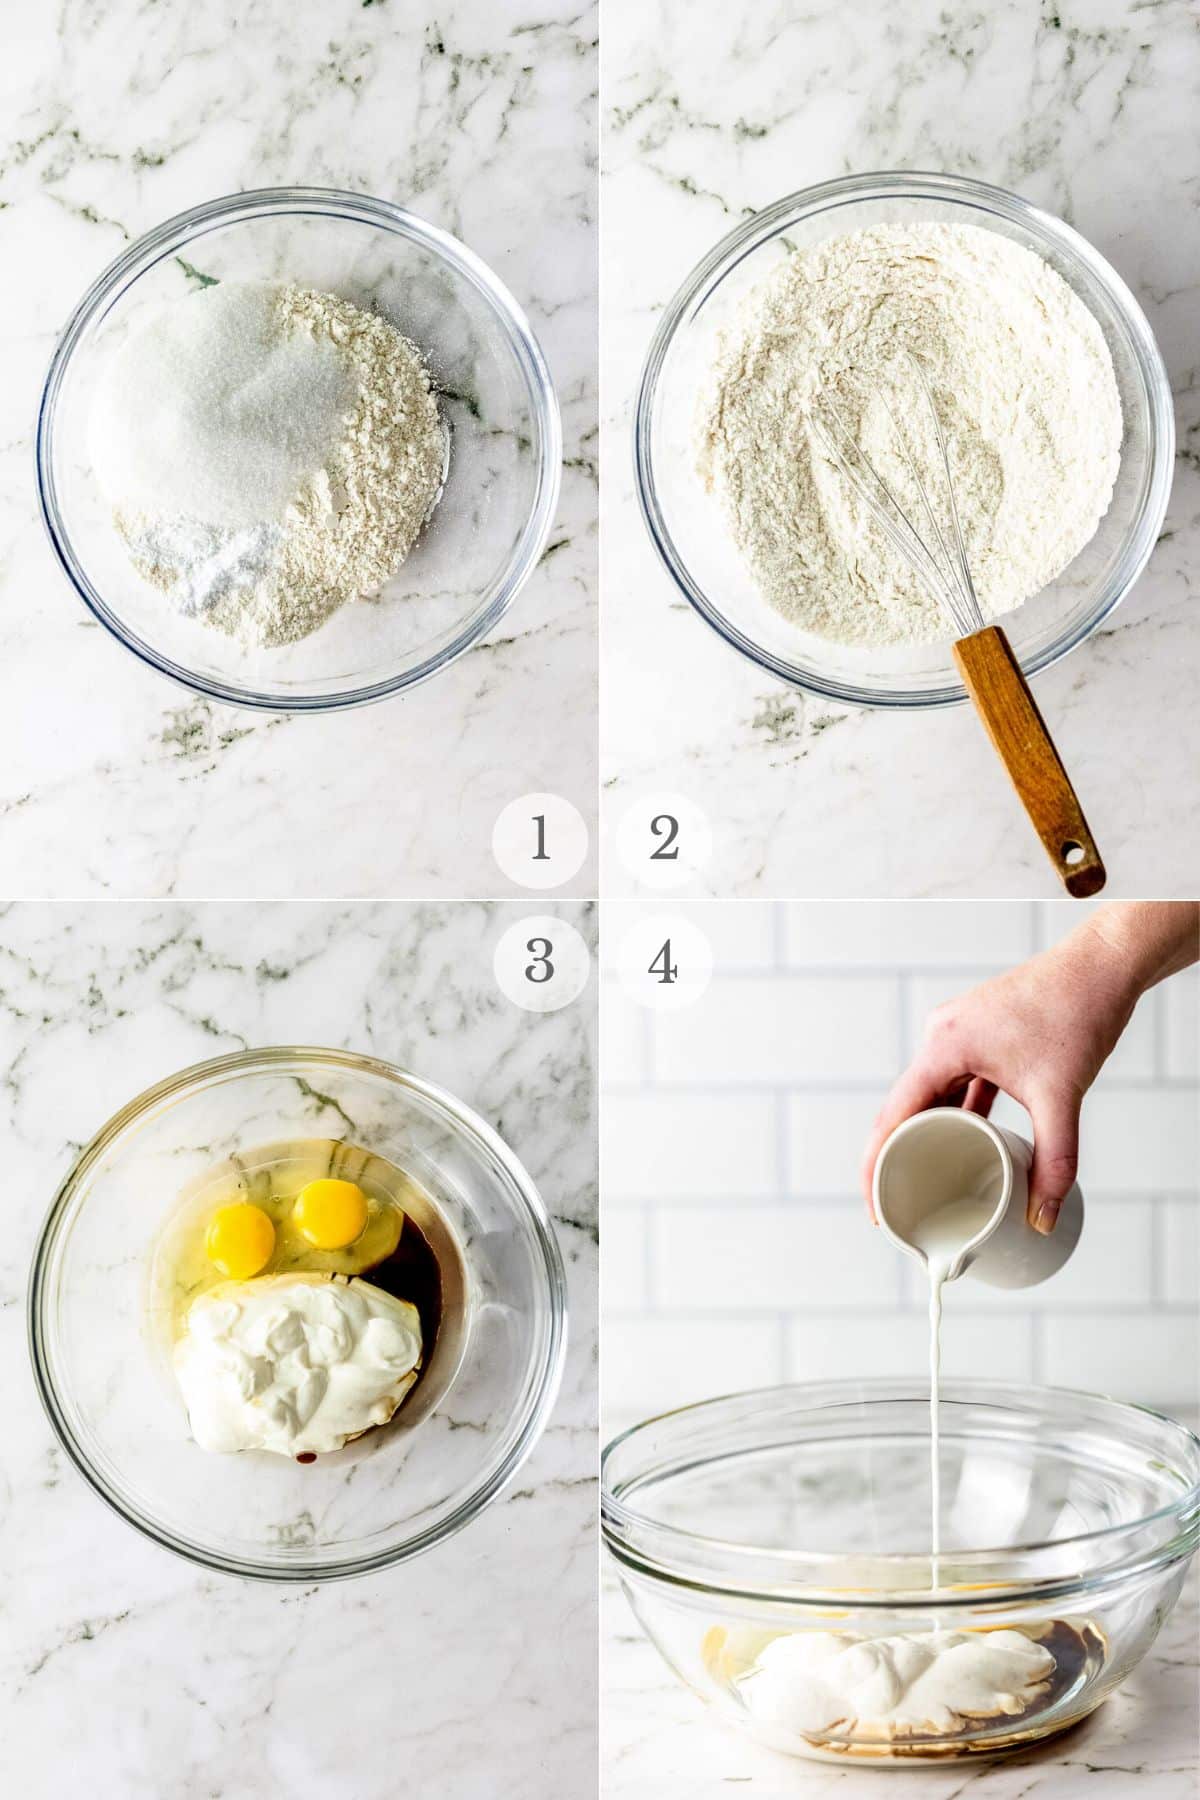 white chocolate raspberry muffins recipe steps 1-4.